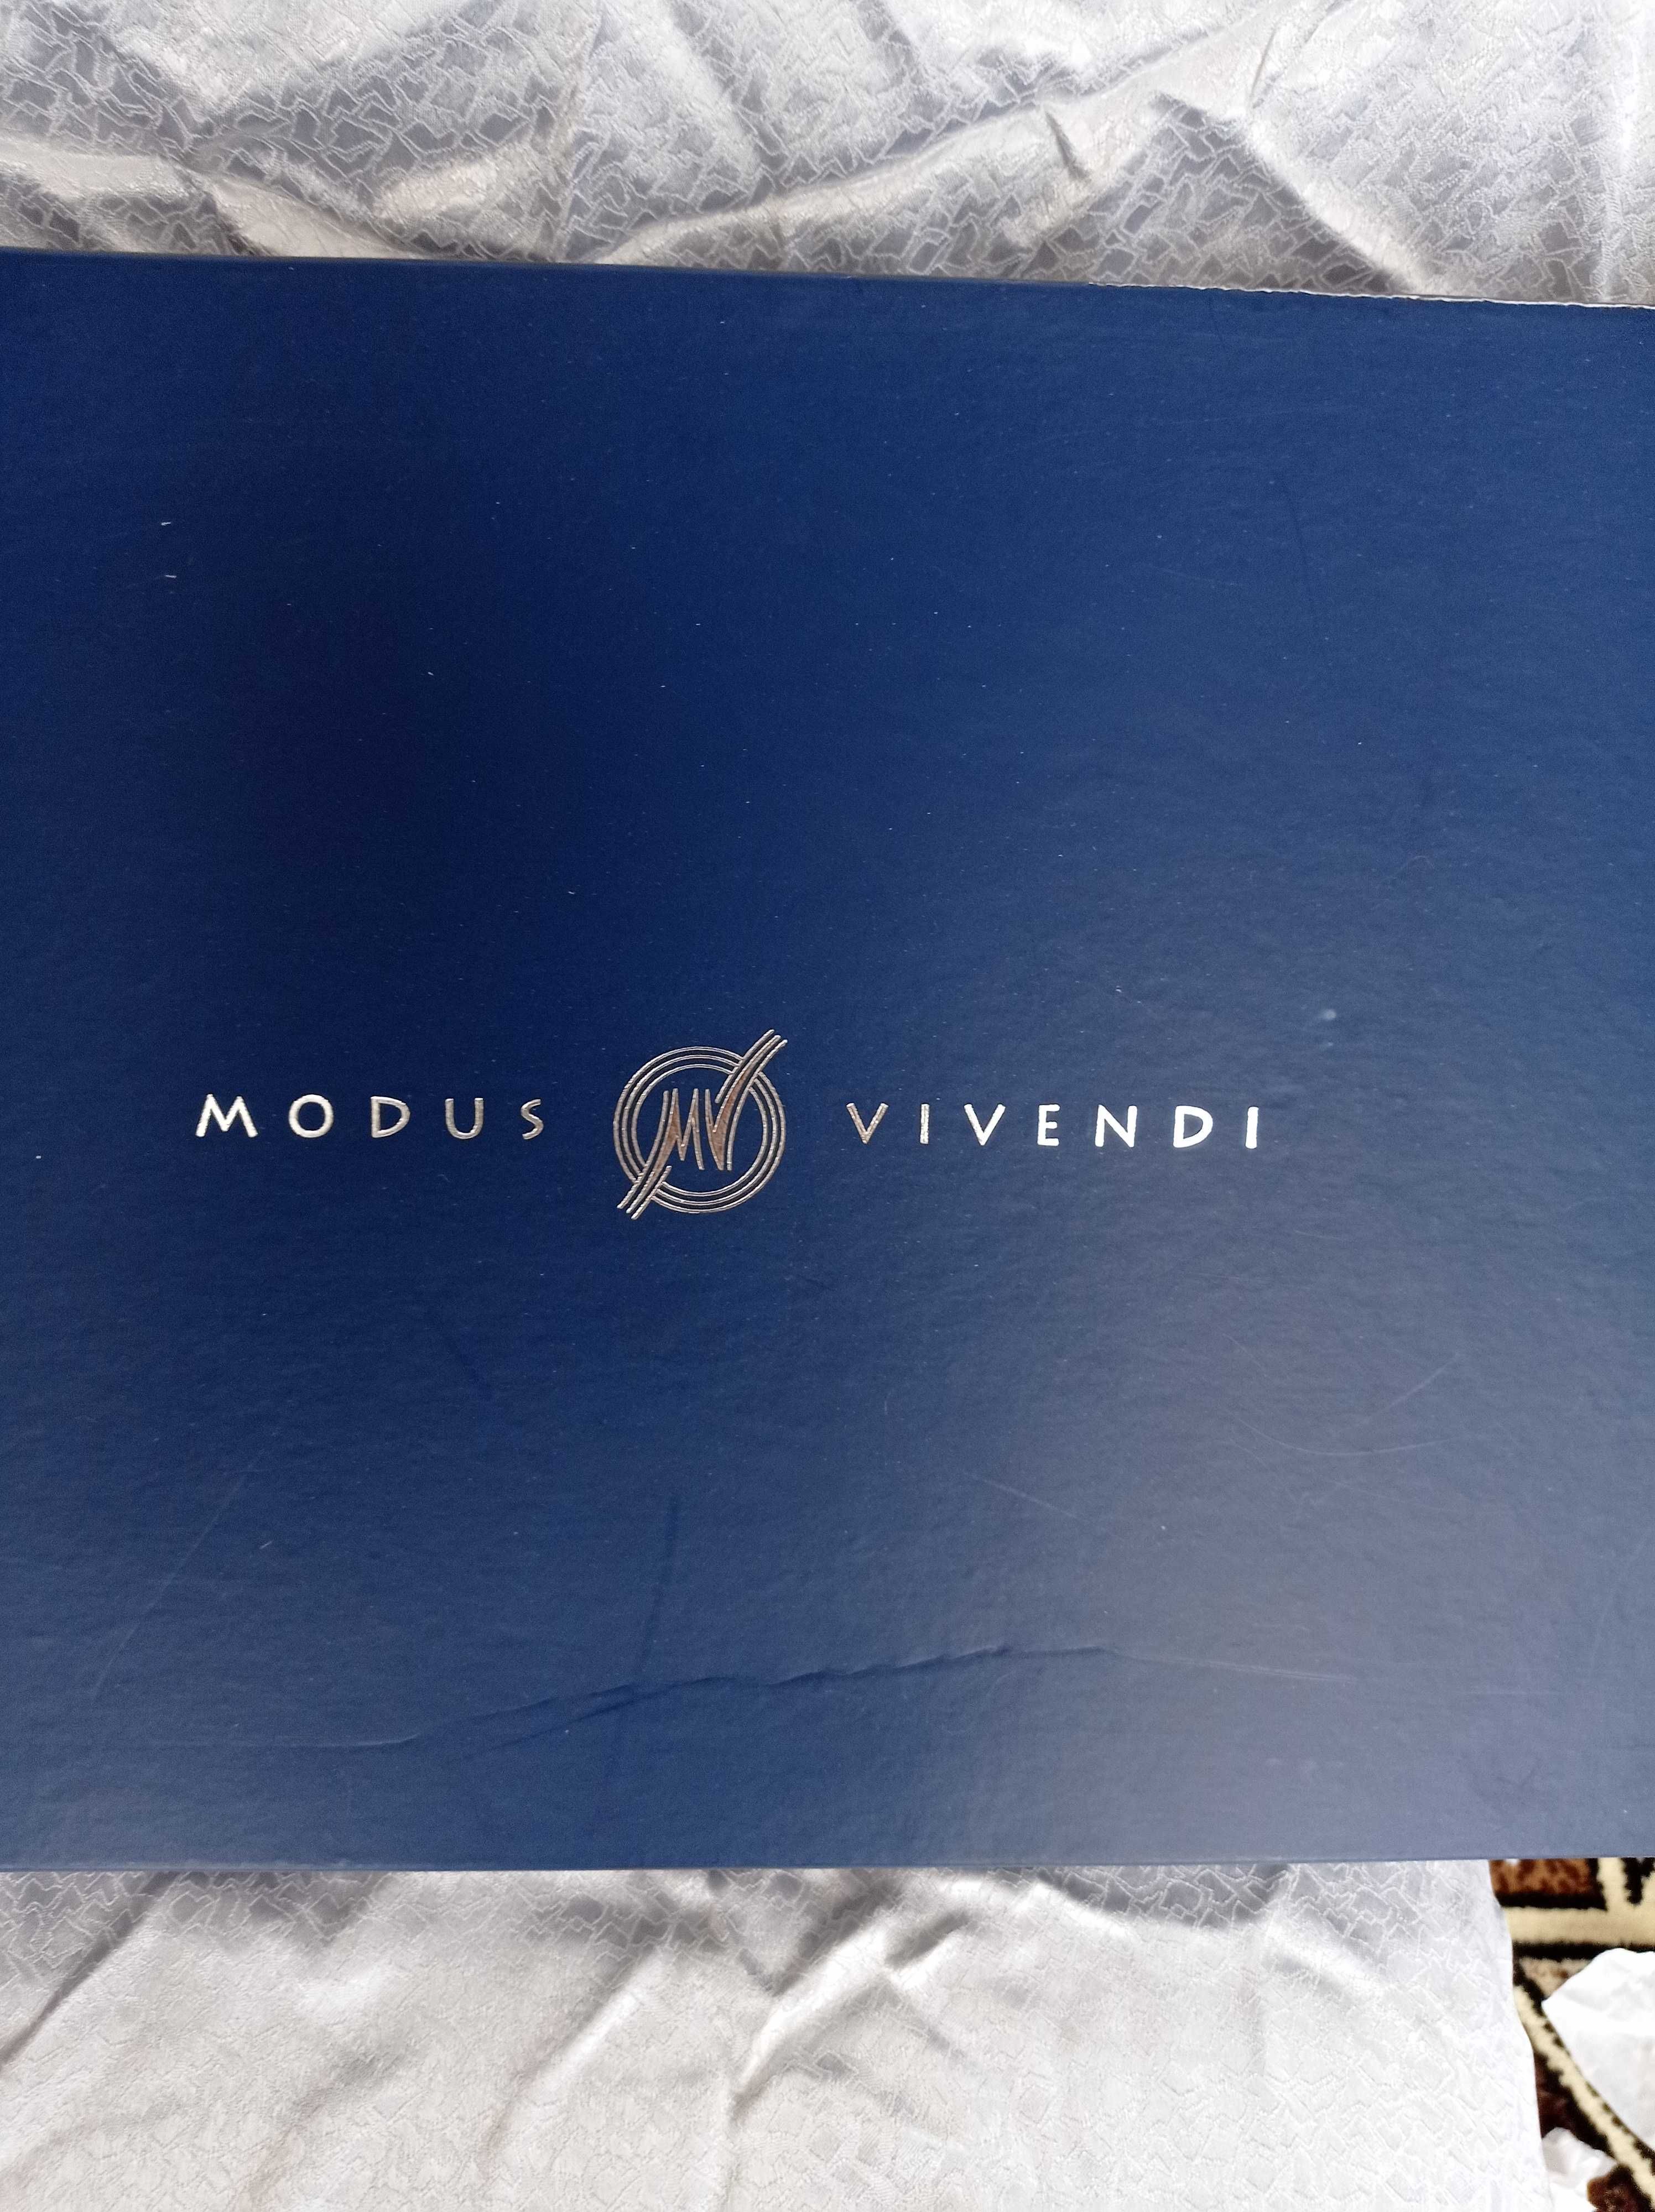 Сапожки Модус Вивенди, Modus Vivendi, 37 размер, темно синие